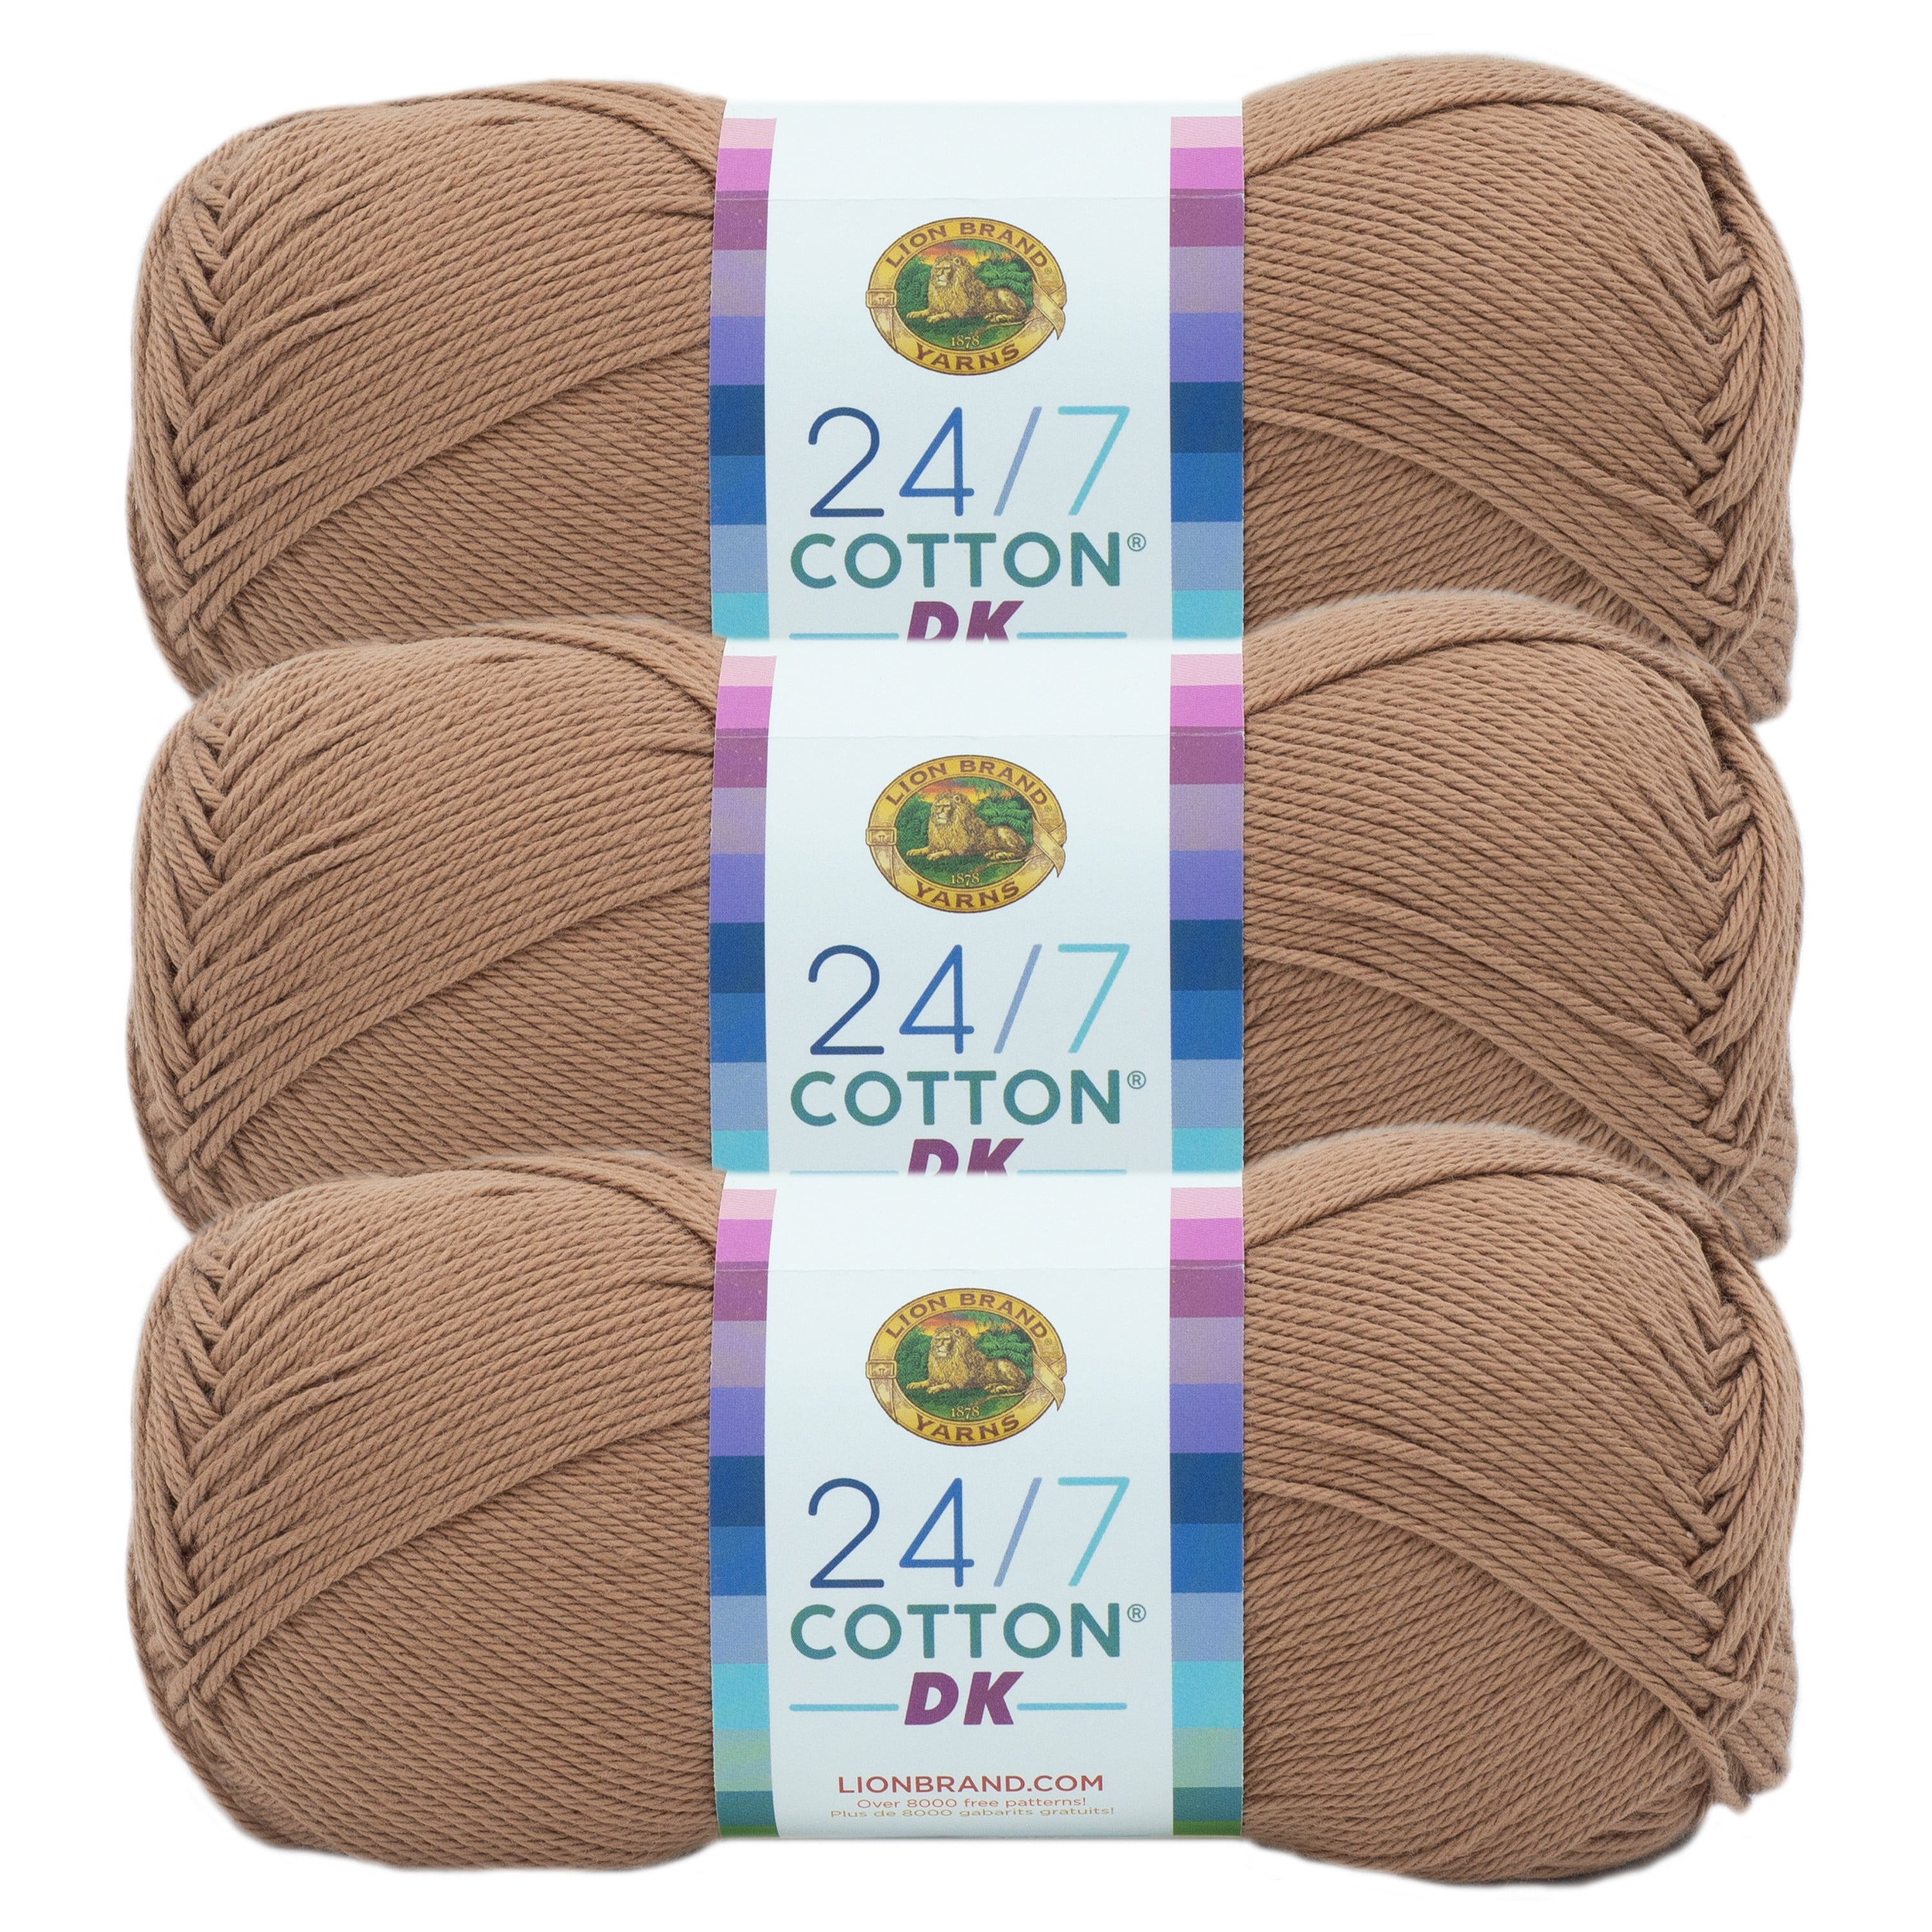 Lion Brand Yarn 24/7 Cotton DK Cacao Light Cotton Brown Yarn 3 Pack ...